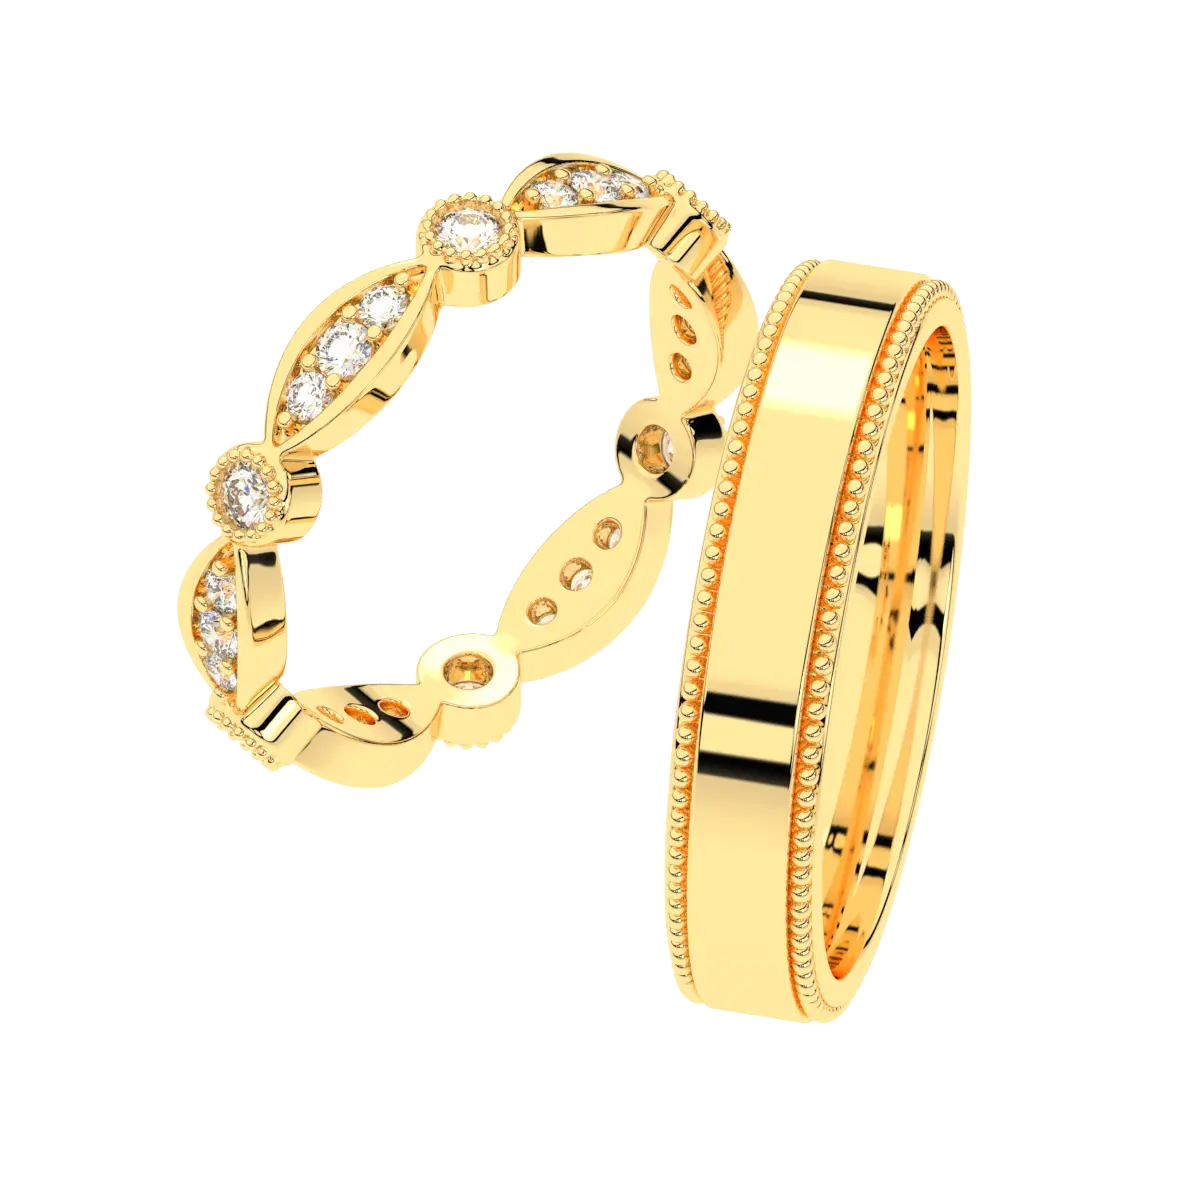 High Quality Wedding Rings 14k Yellow Gold Cubic Zirconia Stone Real Gold Women Men Engagement Wedding Rings Set Couple